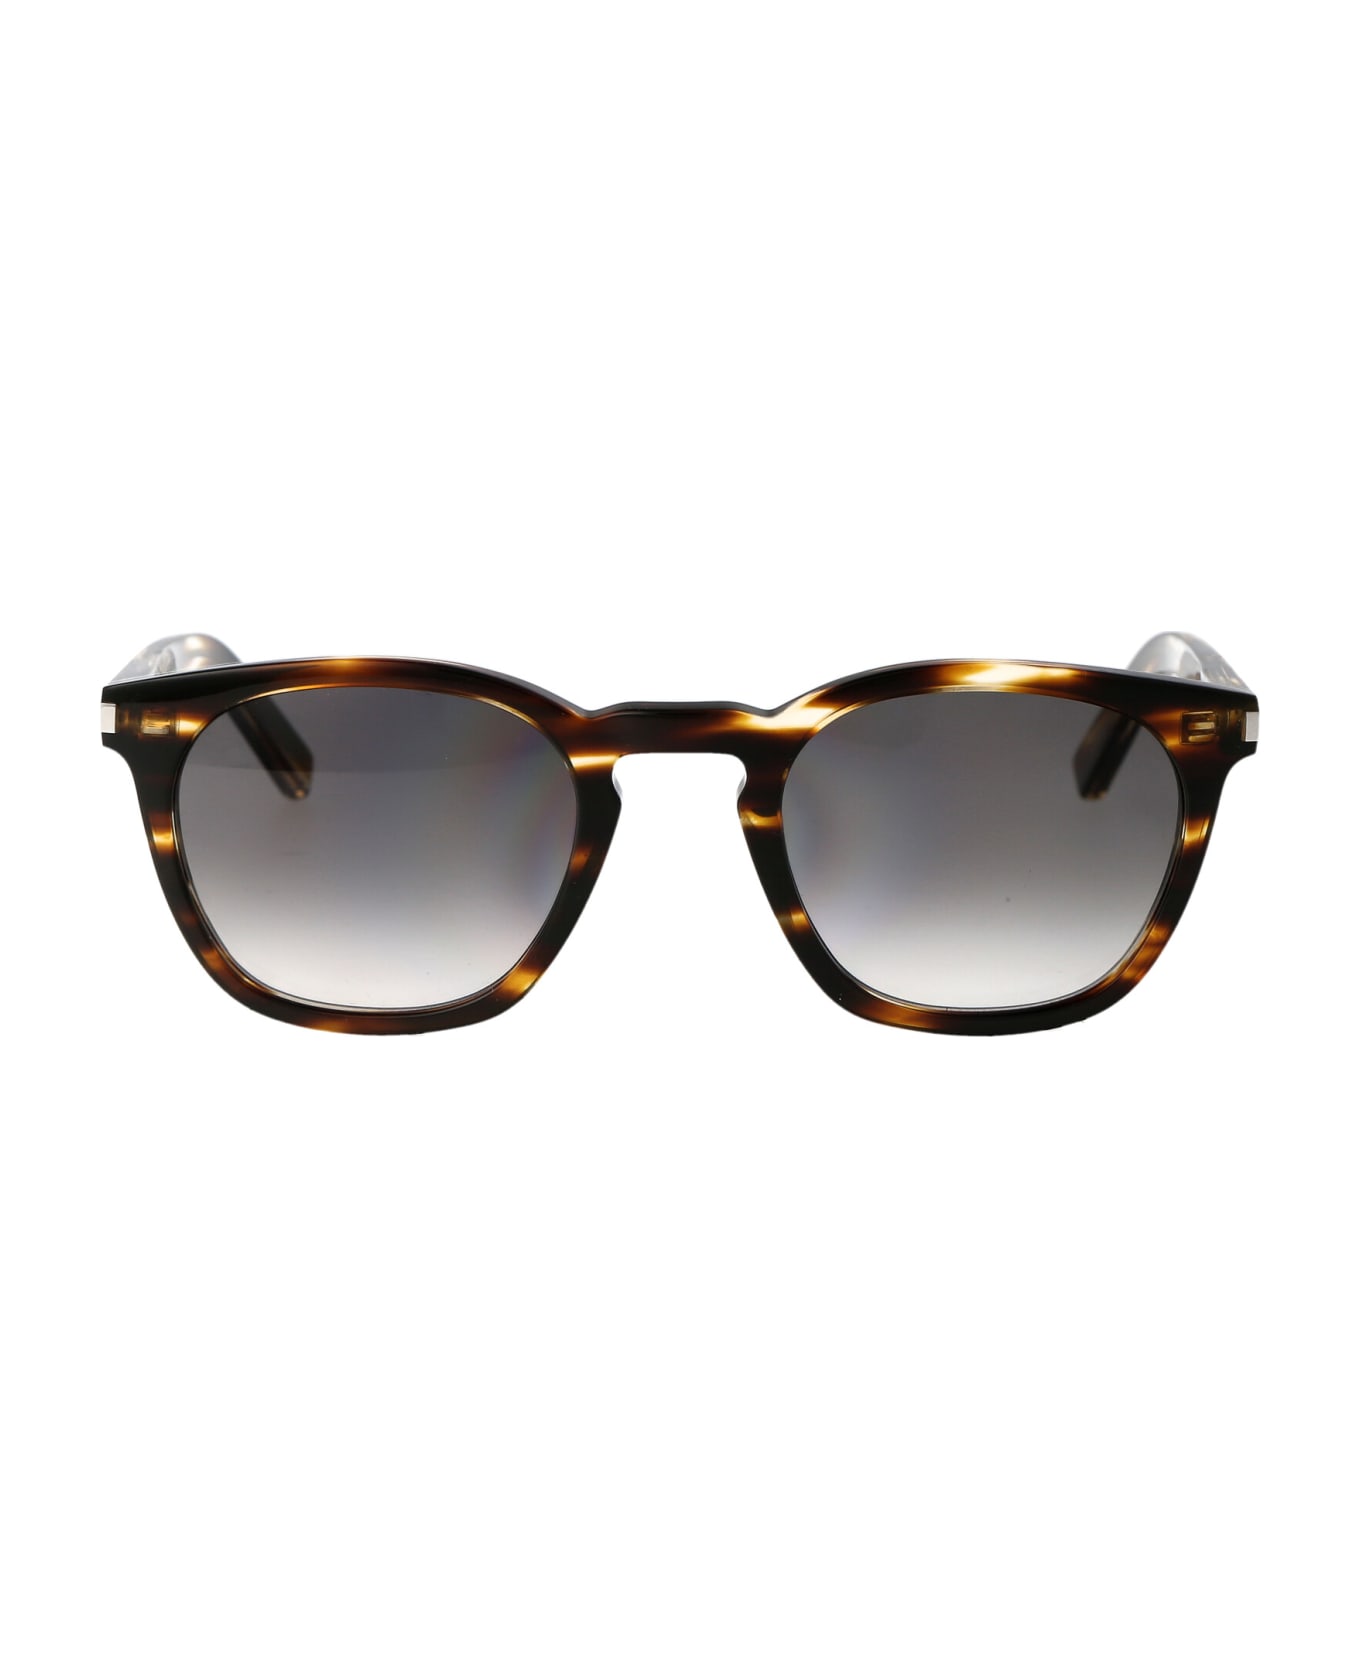 Saint Laurent Eyewear Sl 28 Sunglasses - 045 HAVANA HAVANA GREY